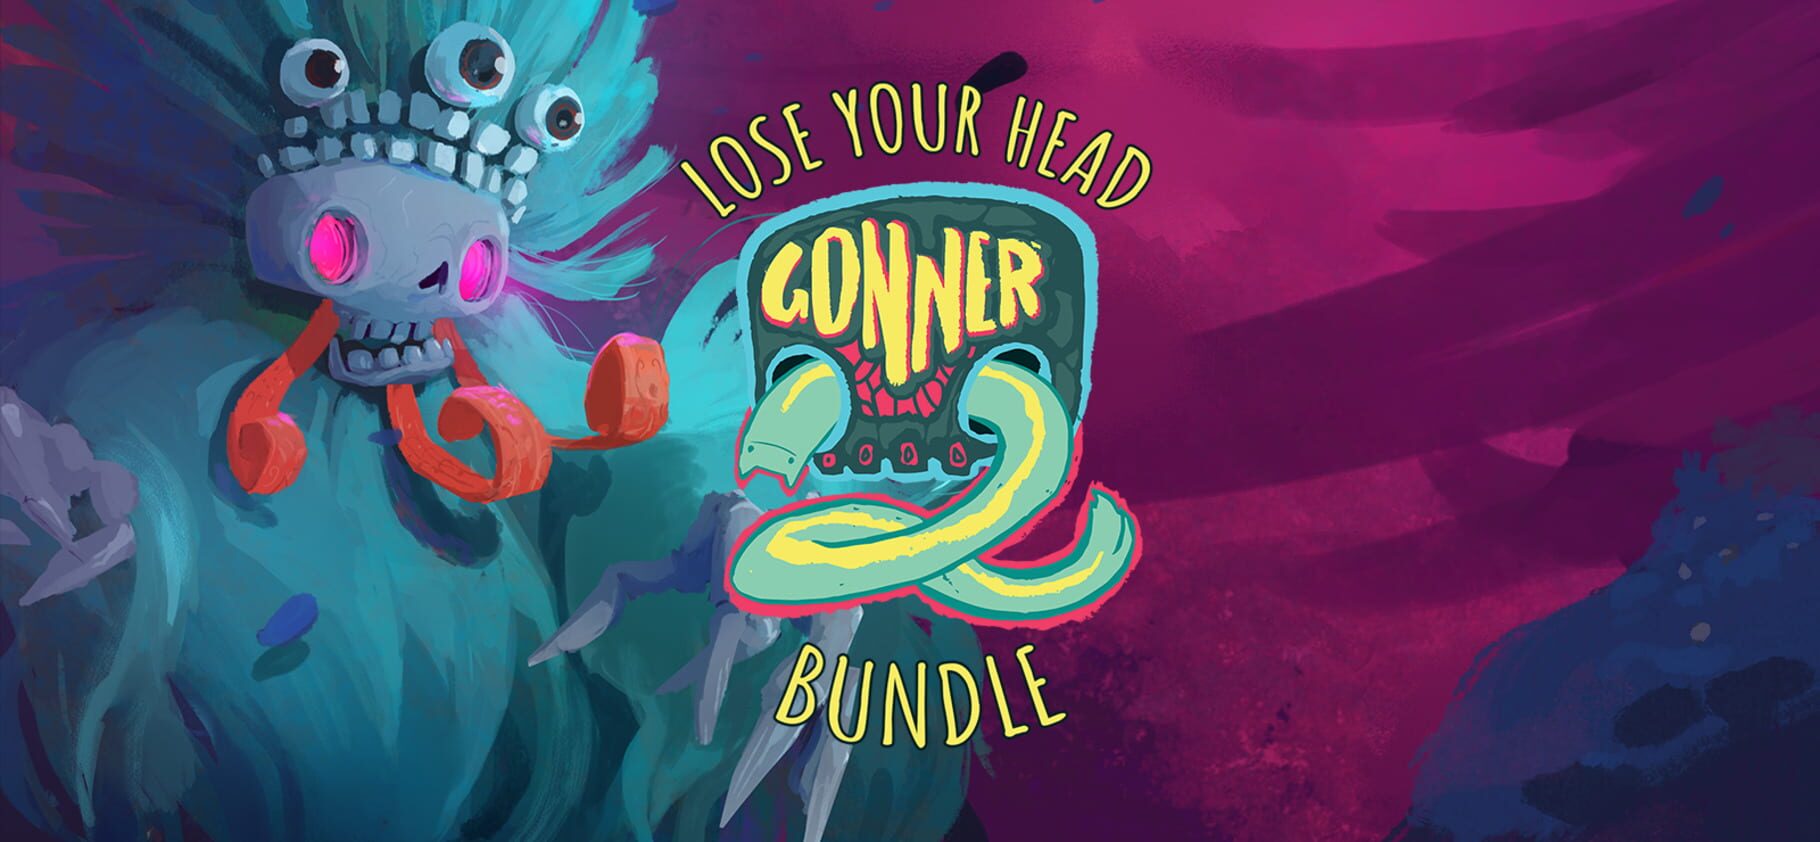 Gonner2: Lose Your Head Bundle artwork